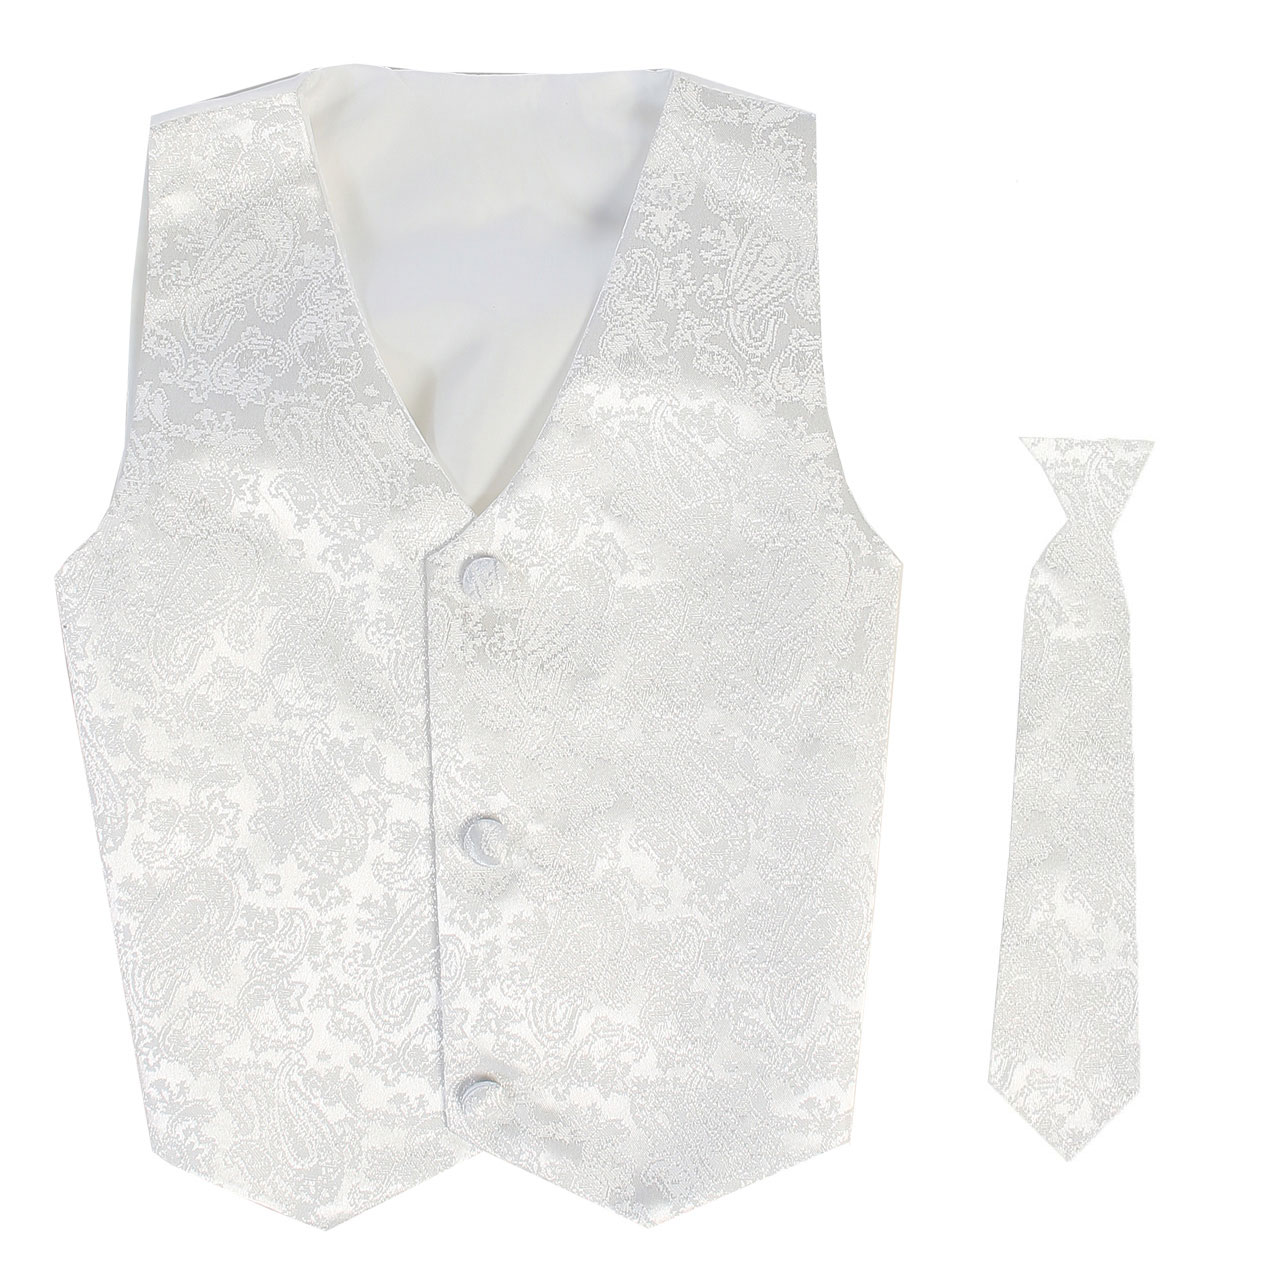 Vest and Clip On Boy Necktie set - White Paisley - S/M